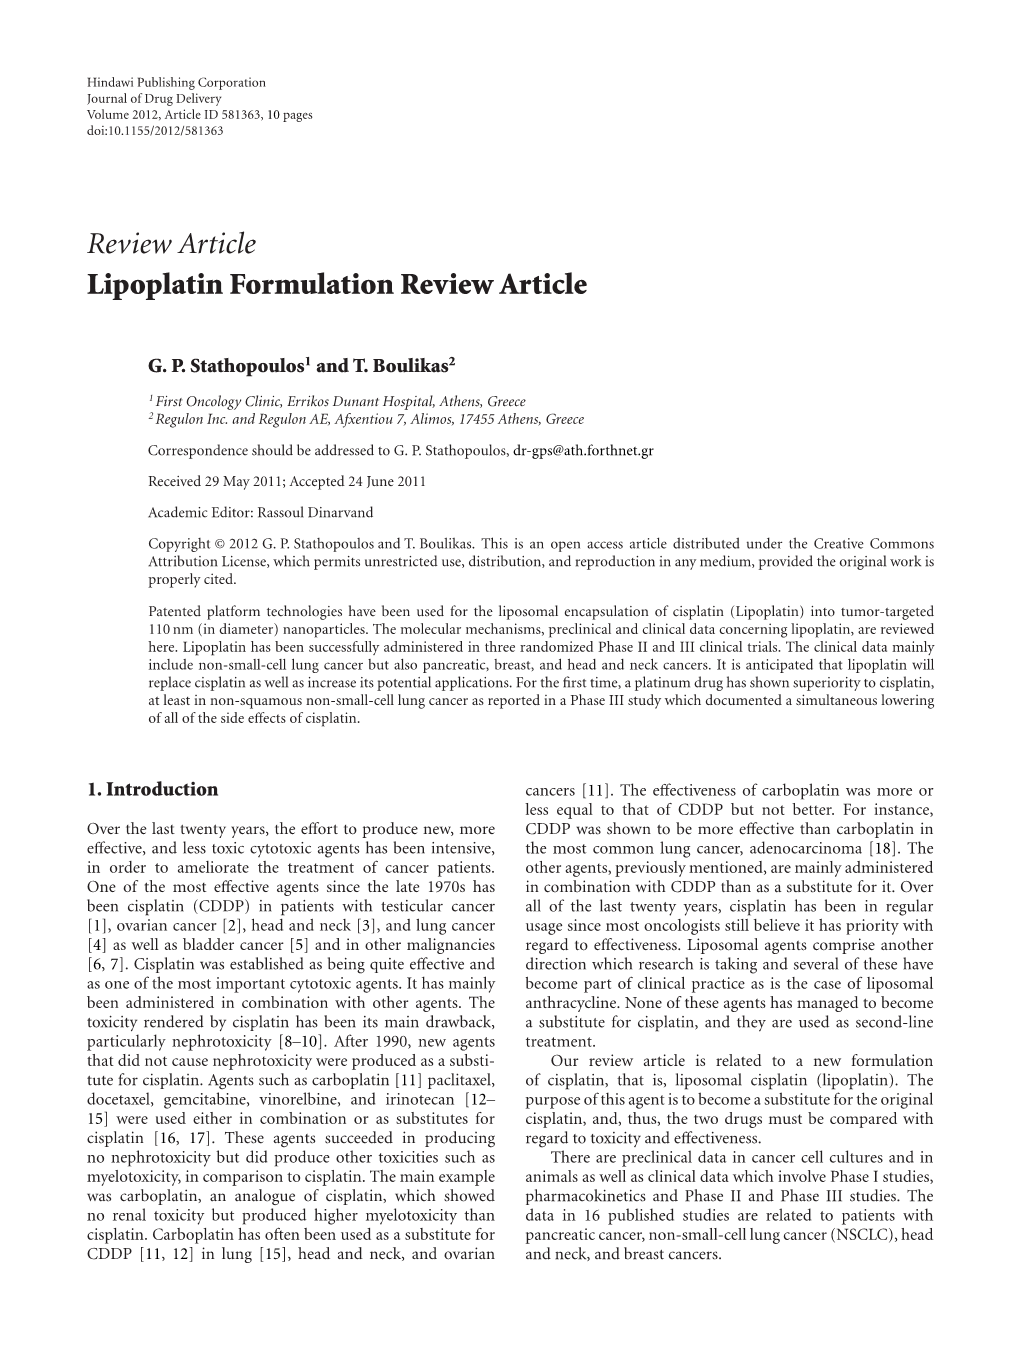 Lipoplatin Formulation Review Article